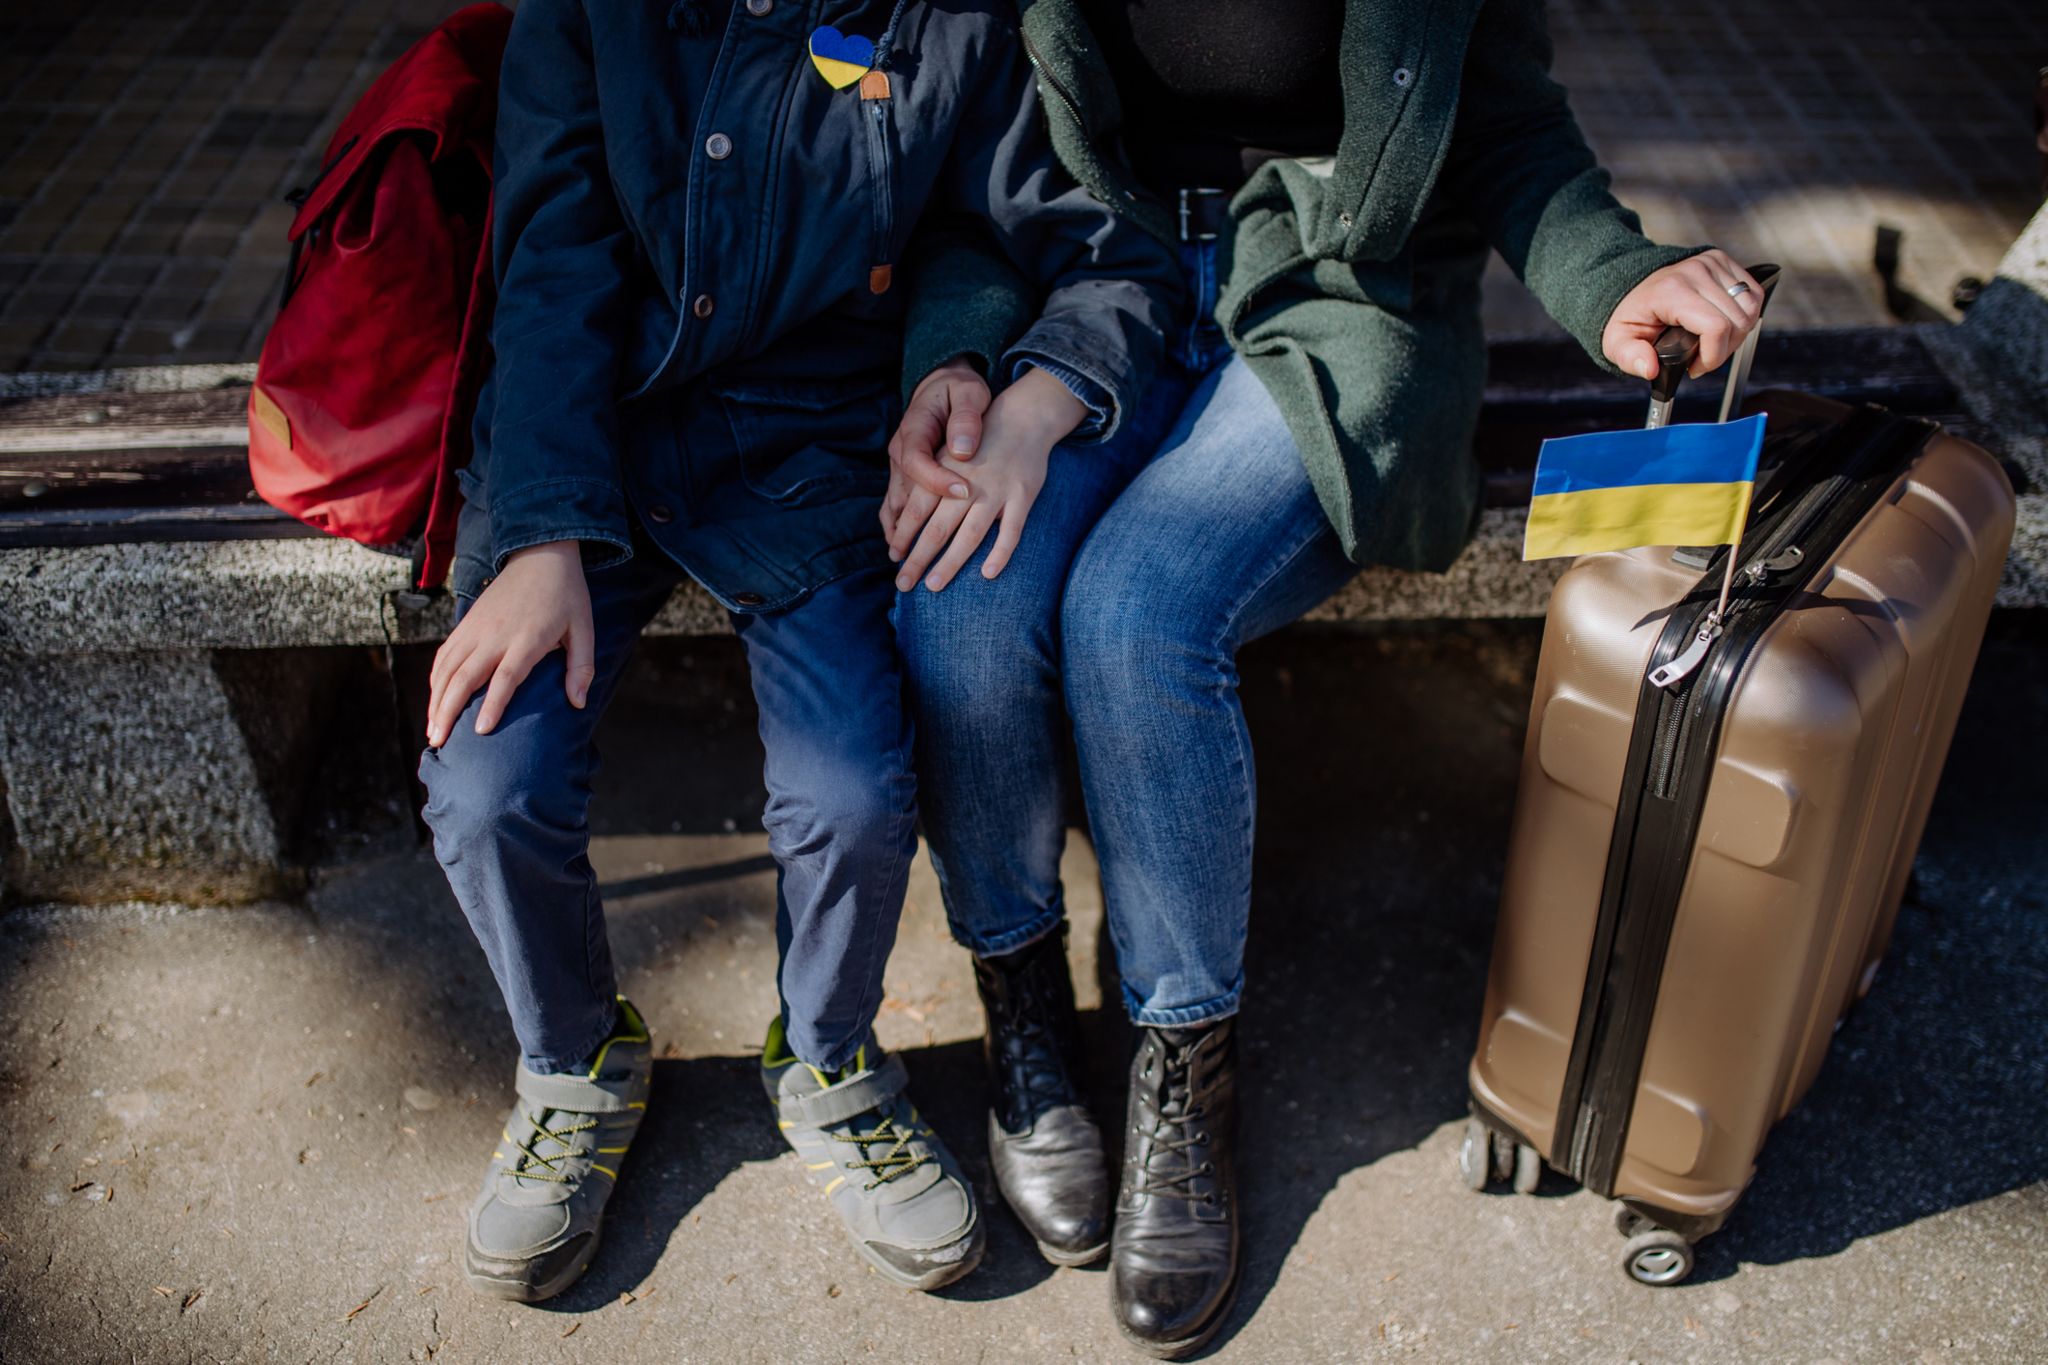 Ukrainian couple with luggage (stock photo)